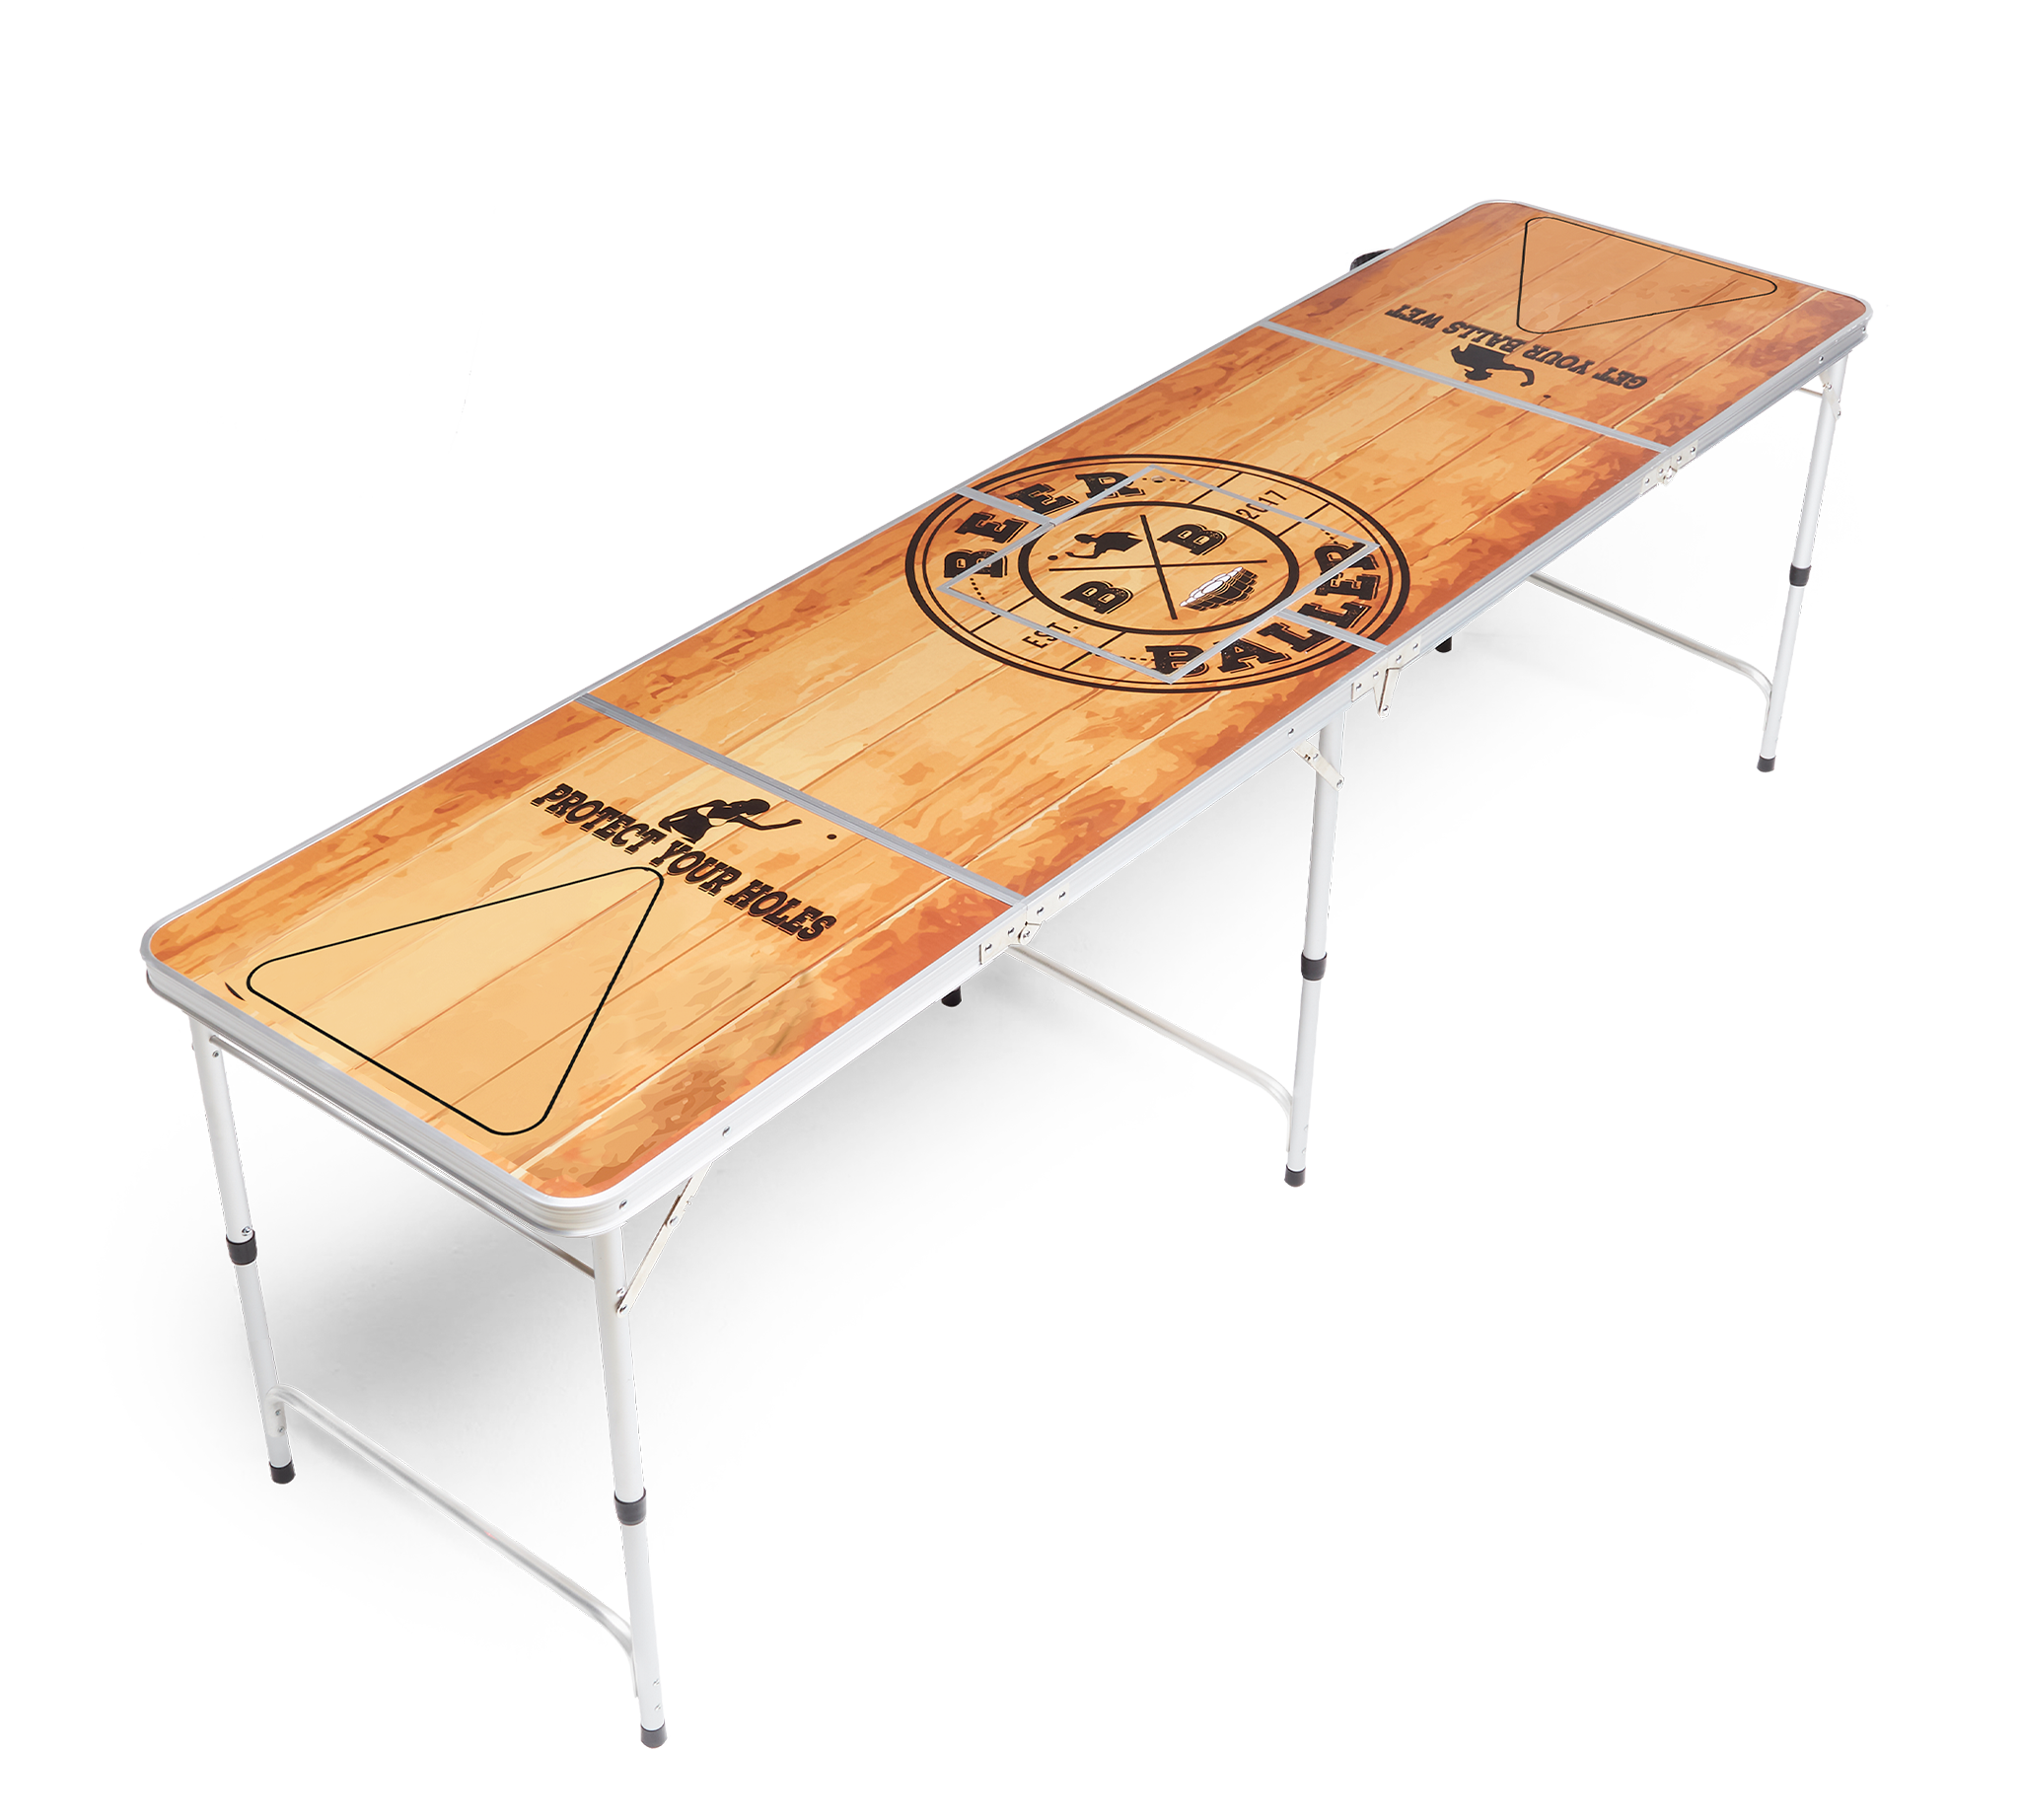 The Oak Beer Pong Table, Eichenholz-Design Bier Pong Tisch von Mr. Pong